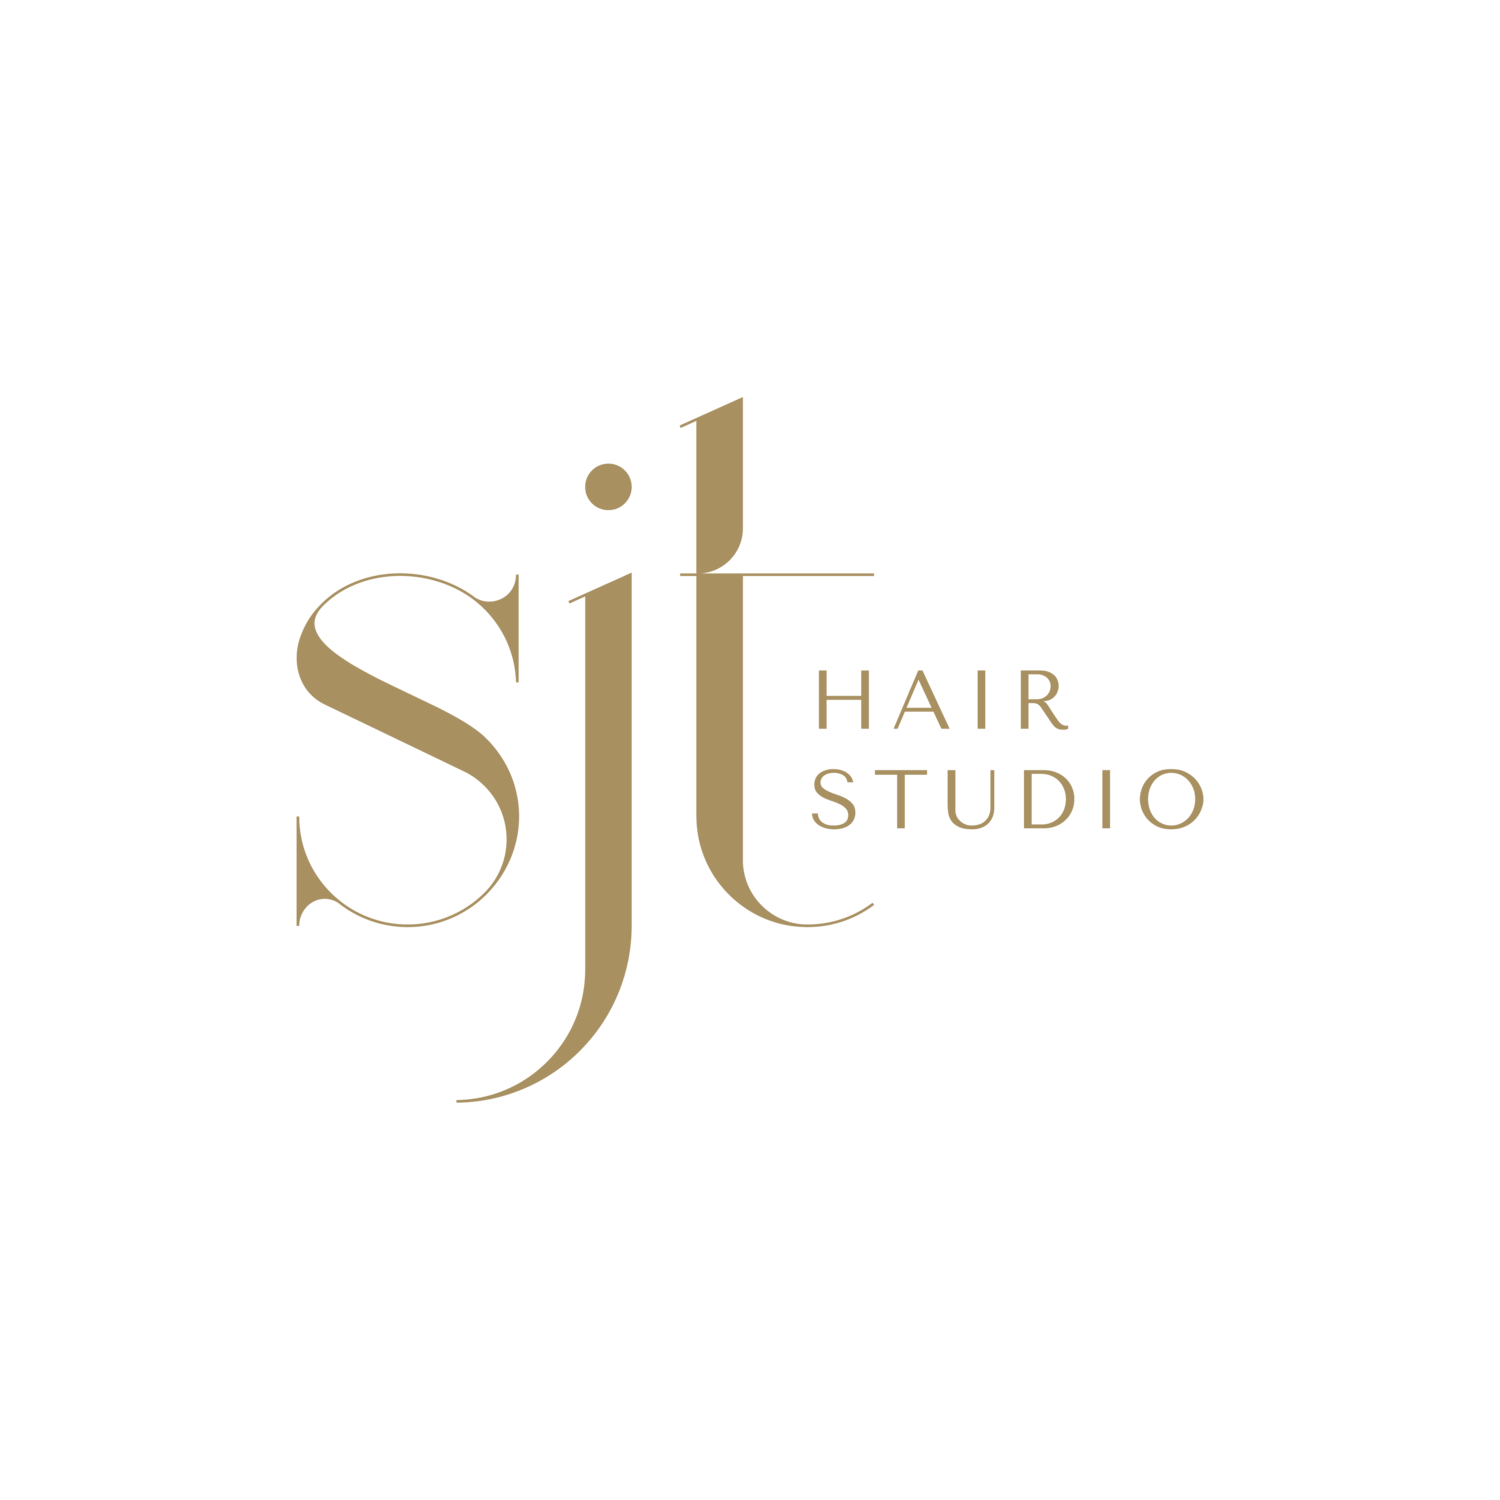 SJT Hair Studio 